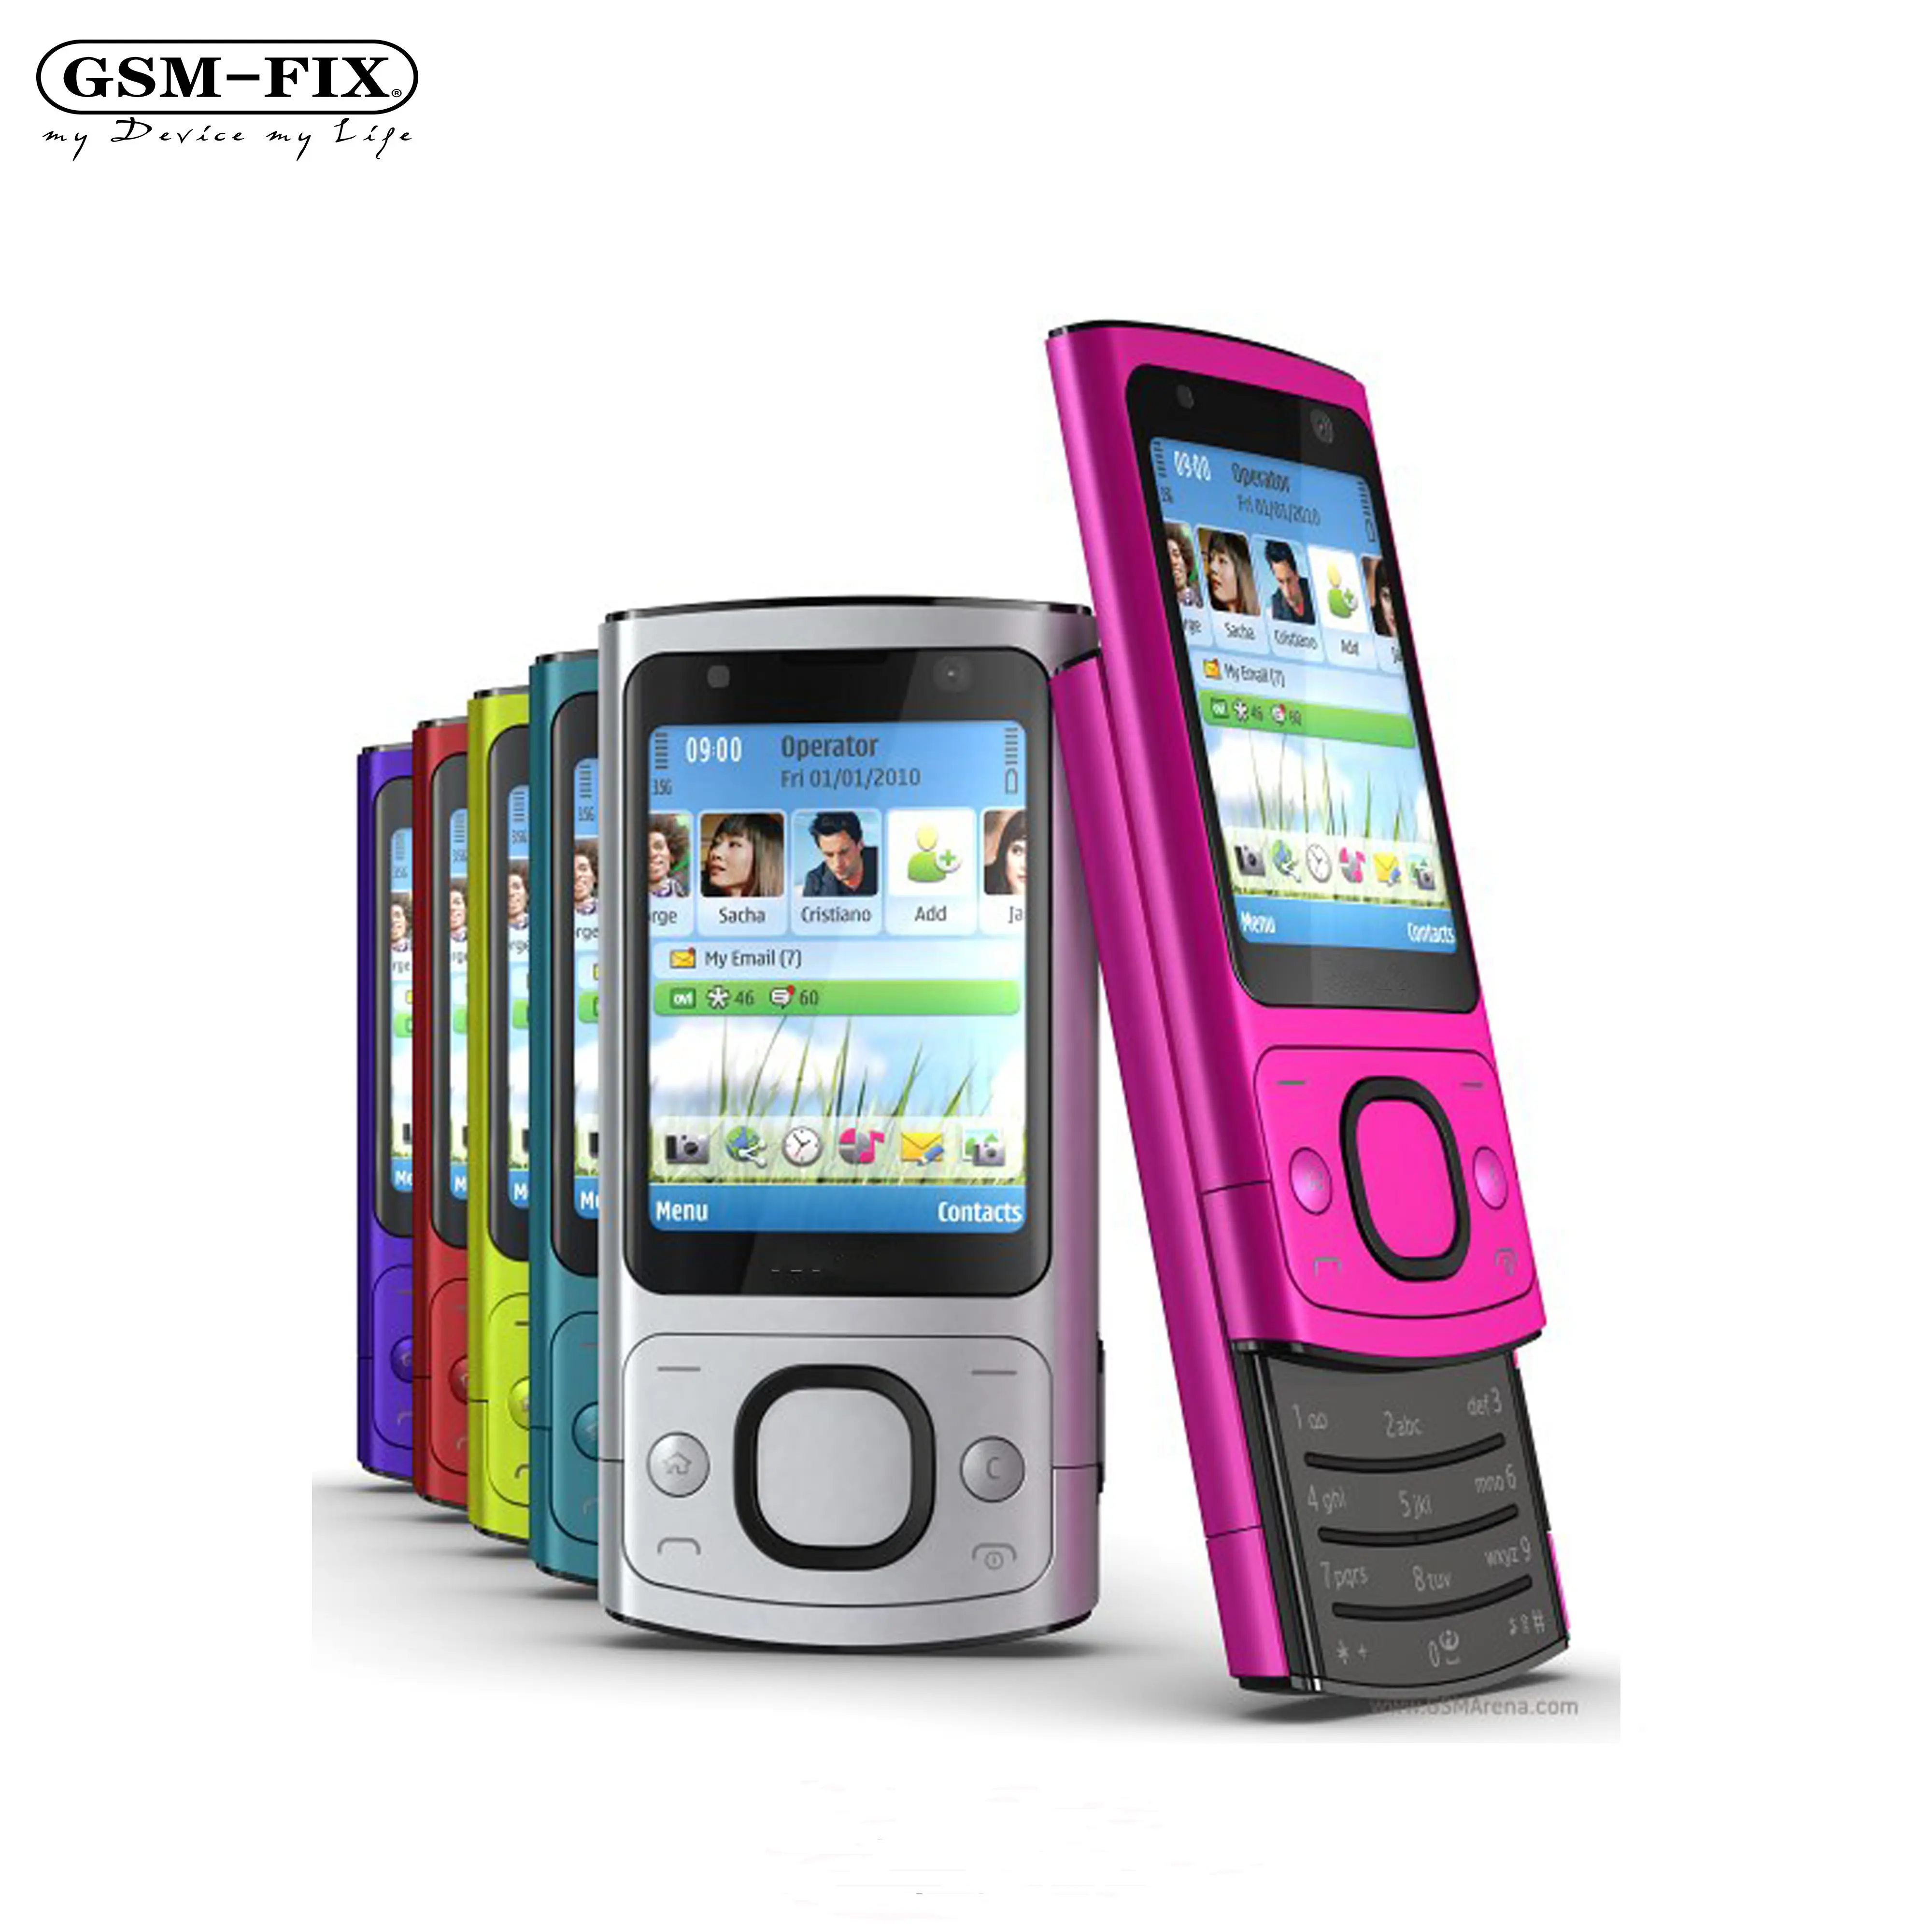 GSM-FIX orijinal 6700 s NOKIA cep telefonu için kamera 5.0MP Bluetooth Java Unlocked 6700 slayt telefon